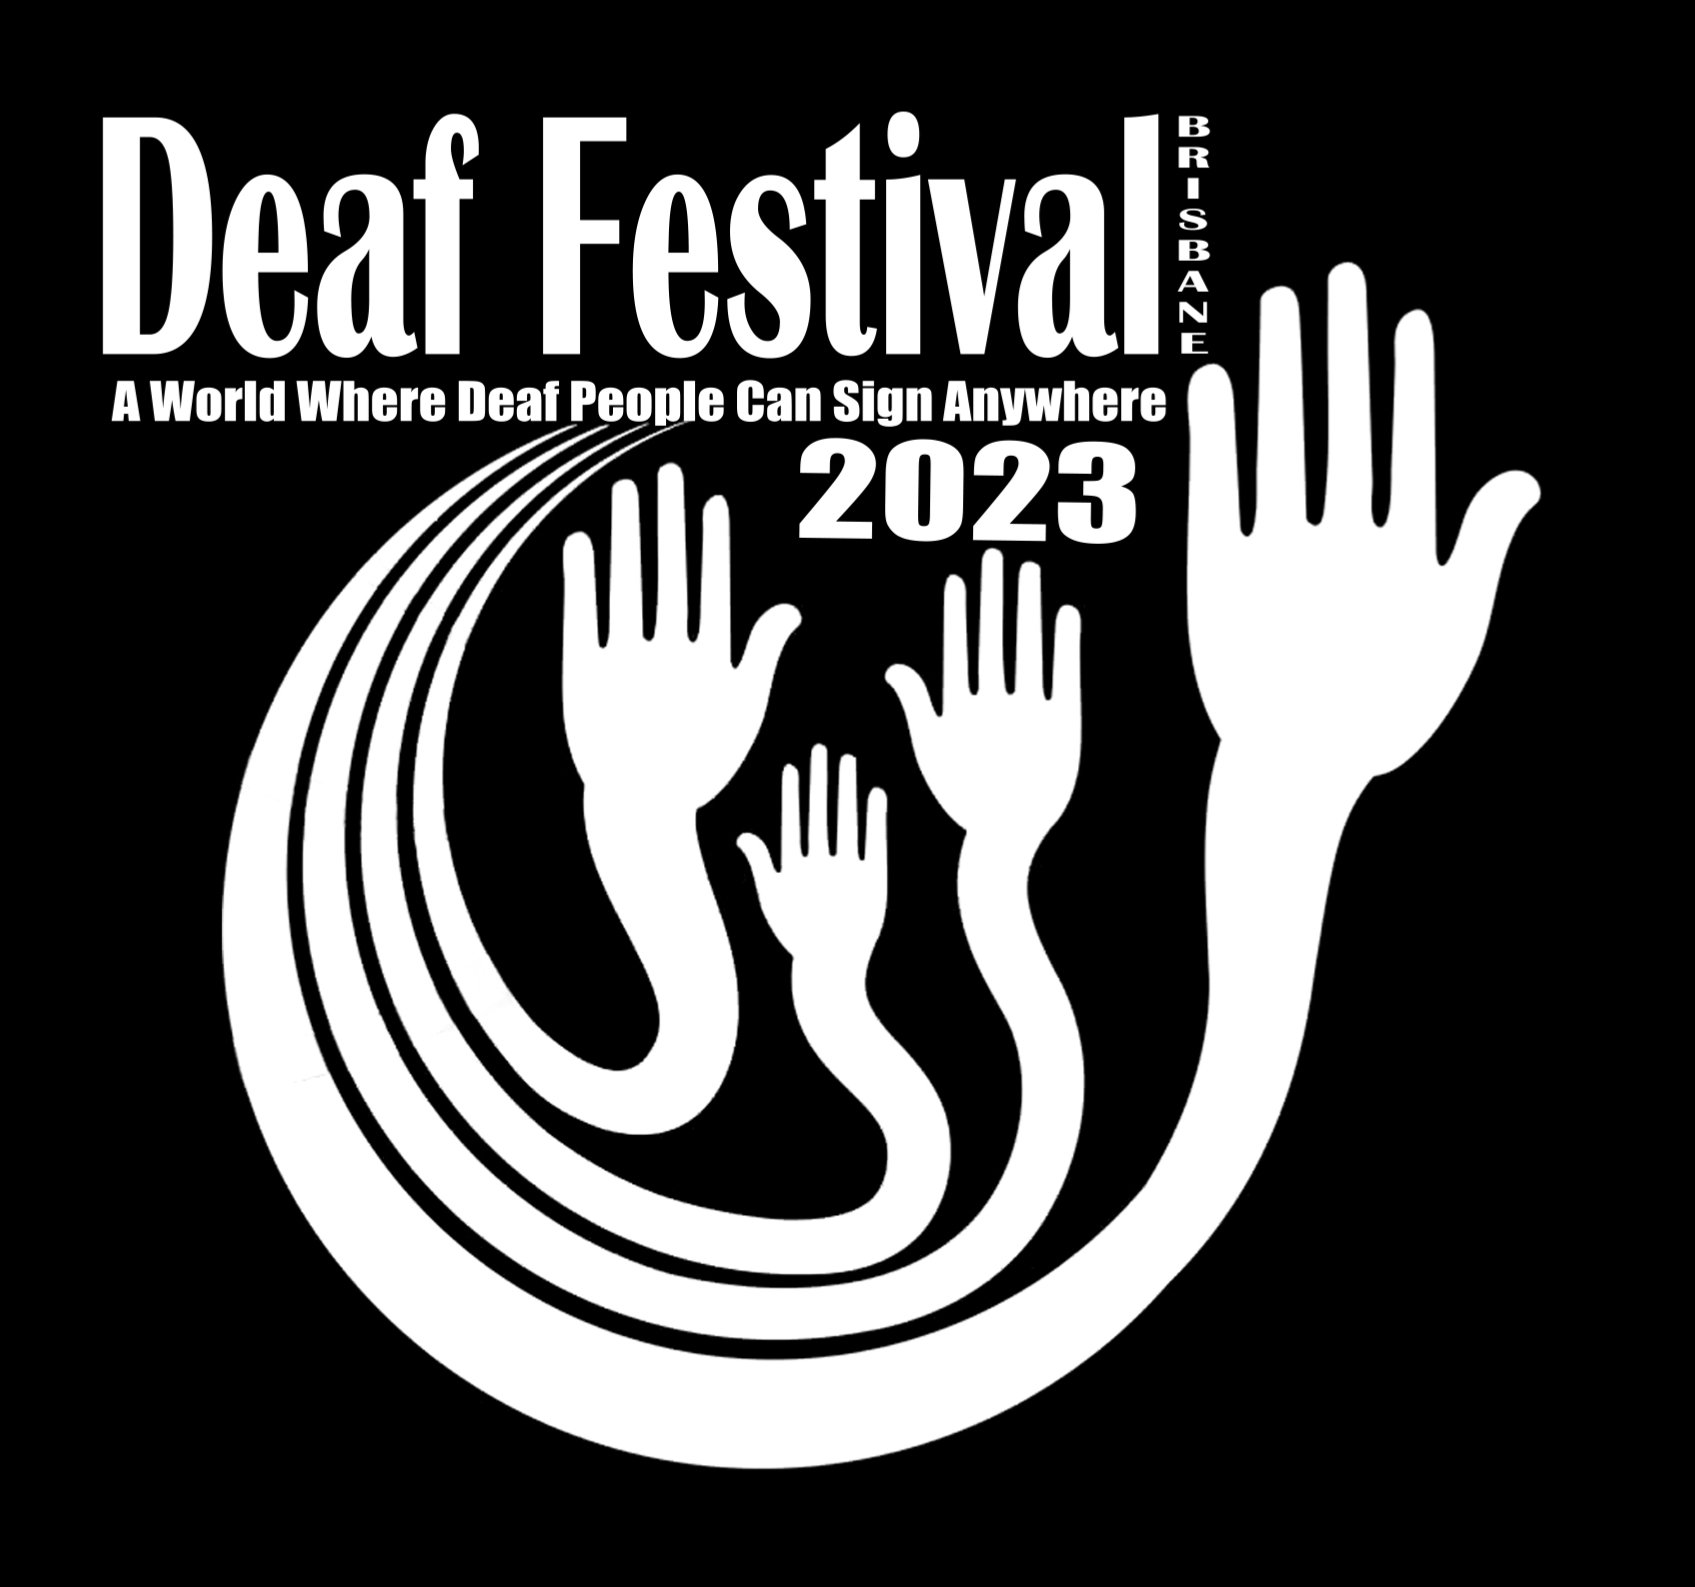 Deaf-Festival-Callie-Rigby-White-copy TRIMMED